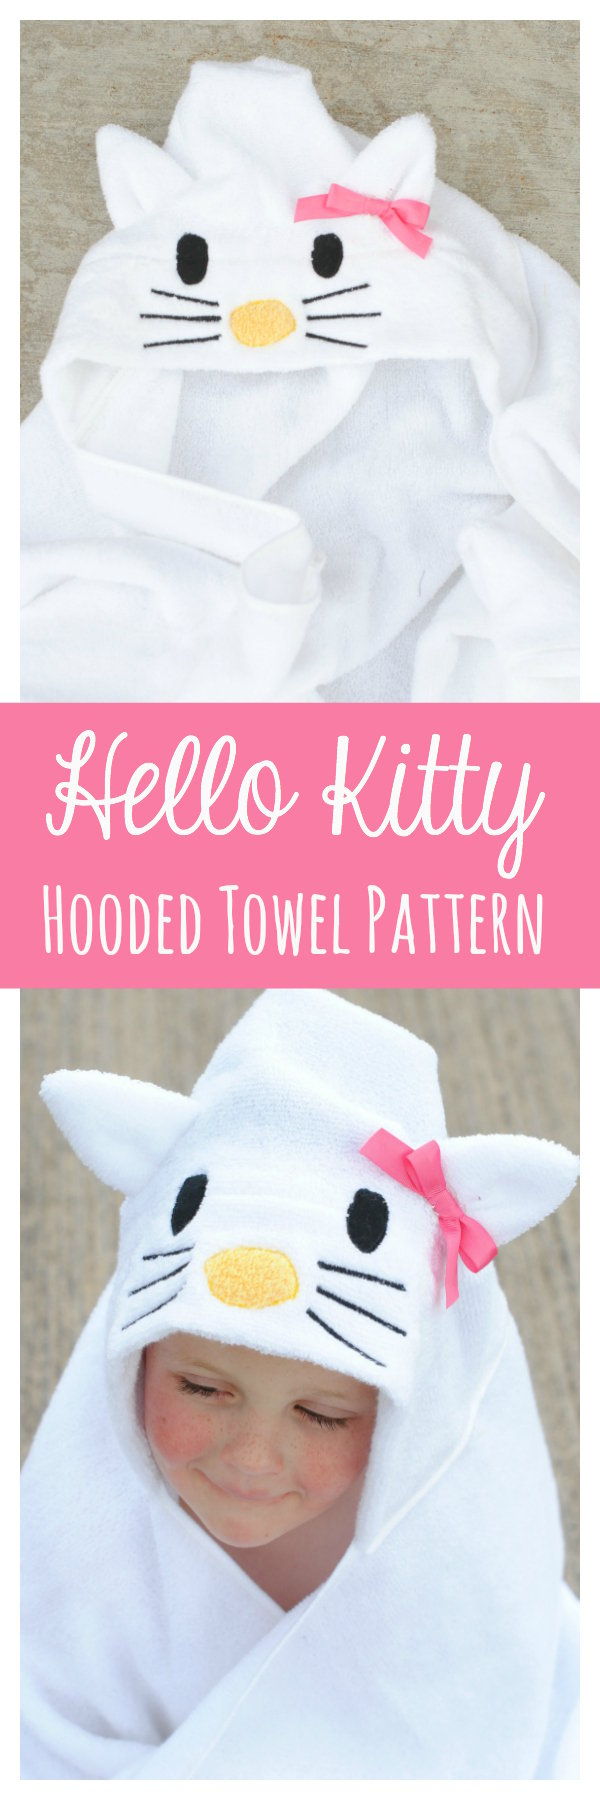 Hello Kitty Hooded Towel Tutorial